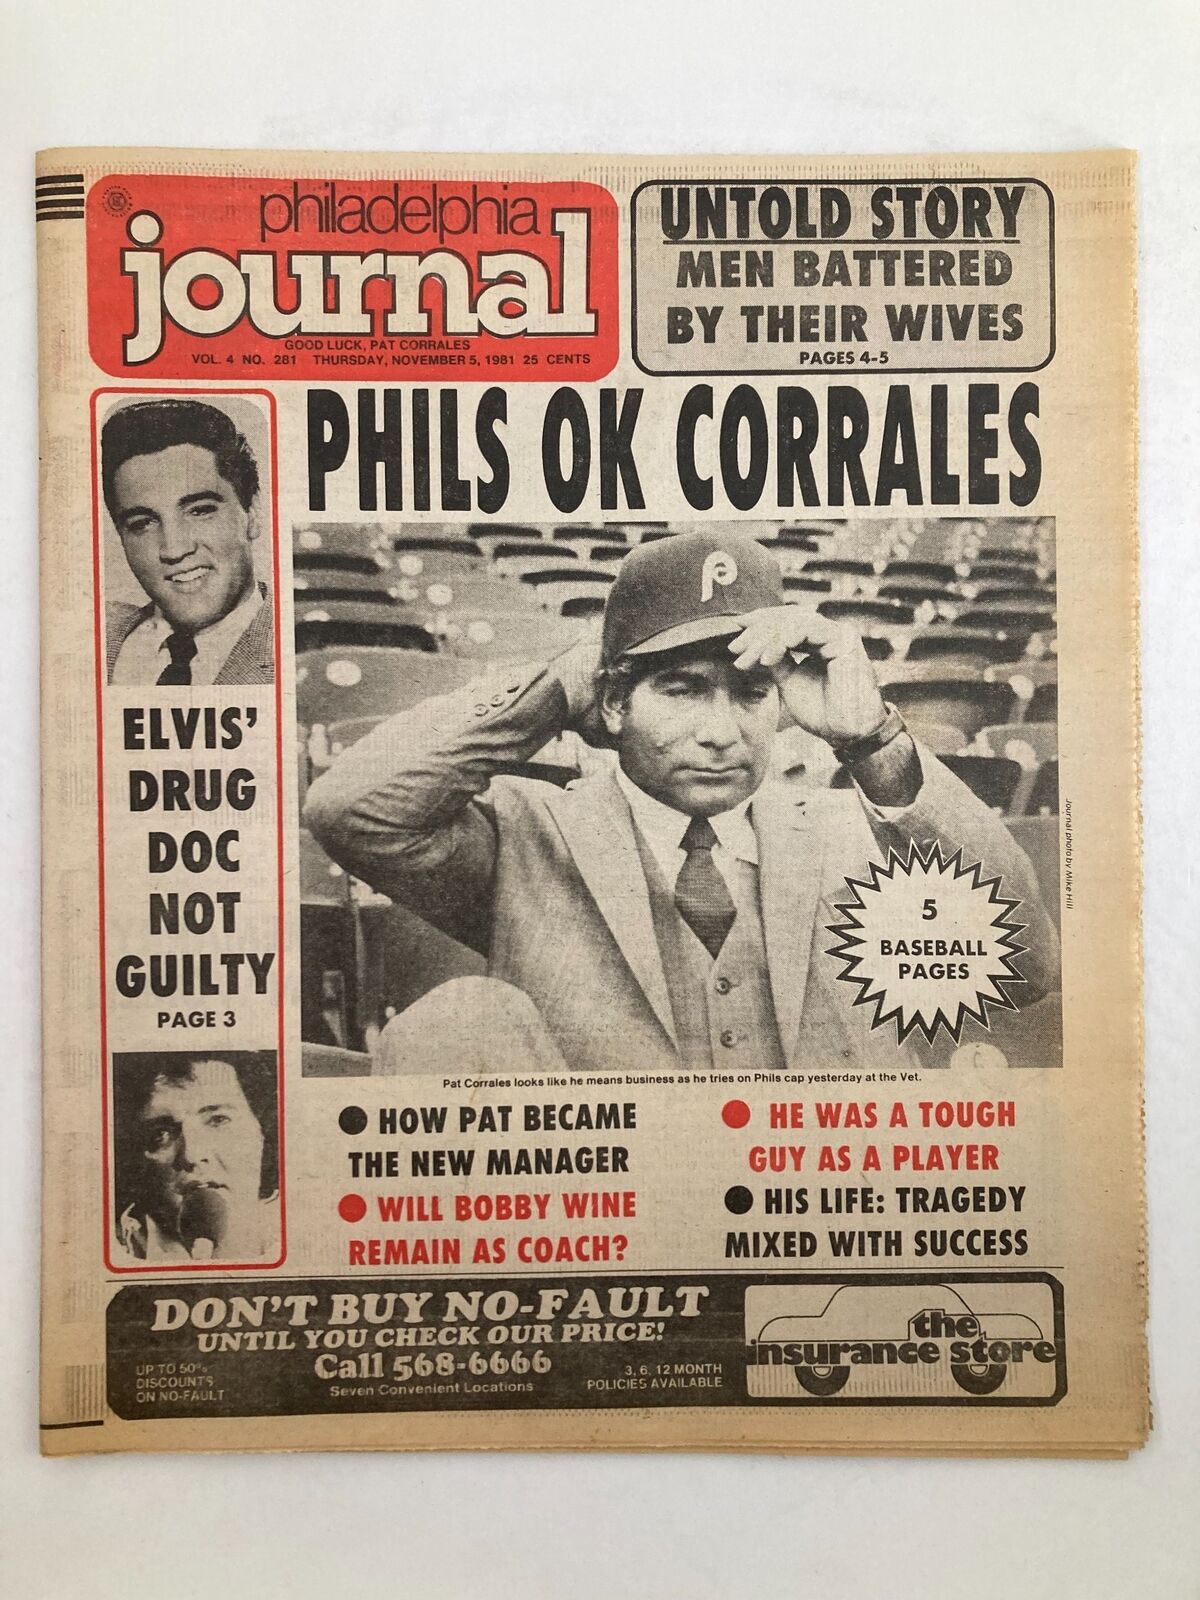 Philadelphia Journal Tabloid November 5 1981 Vol 4 281 MLB Phillies Pat Corrales